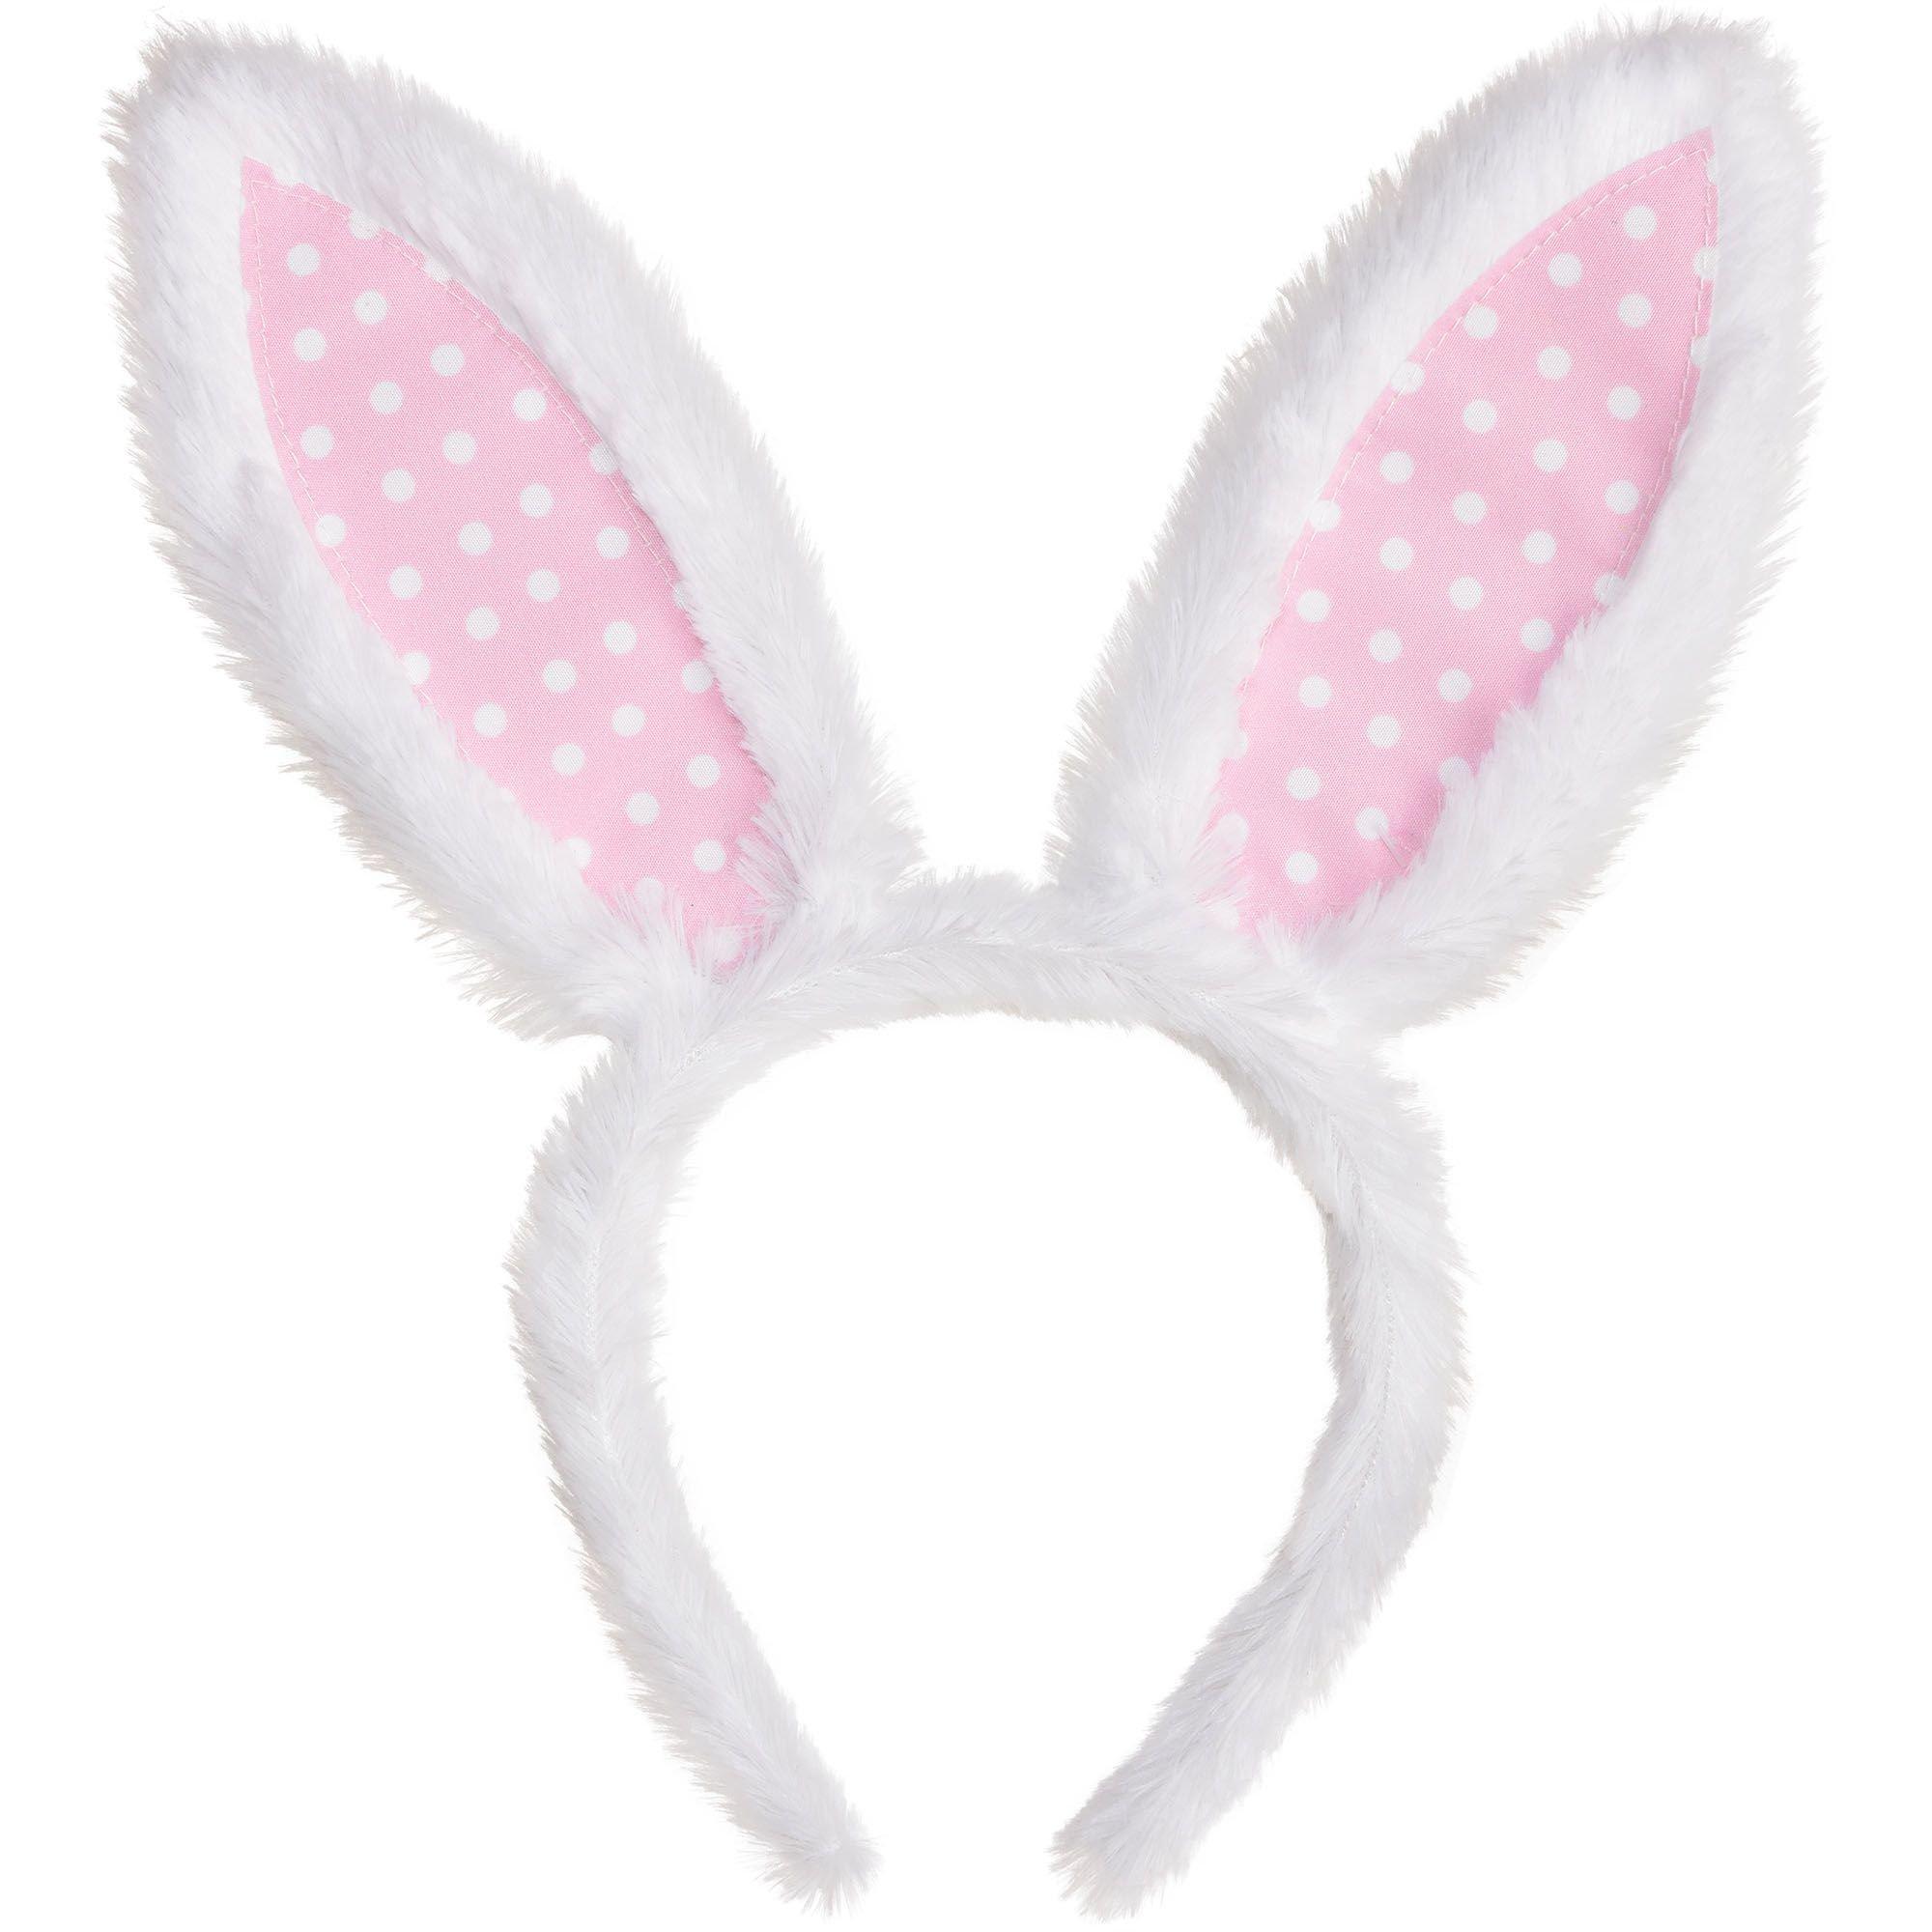  OLYPHAN Bunny Ears Headband Rabbit Ears Headbands Set of 4 /  Soft Plush Bunny Ear Hairband - Red, Light Pink, Pink, White Halloween,  Easter : Clothing, Shoes & Jewelry